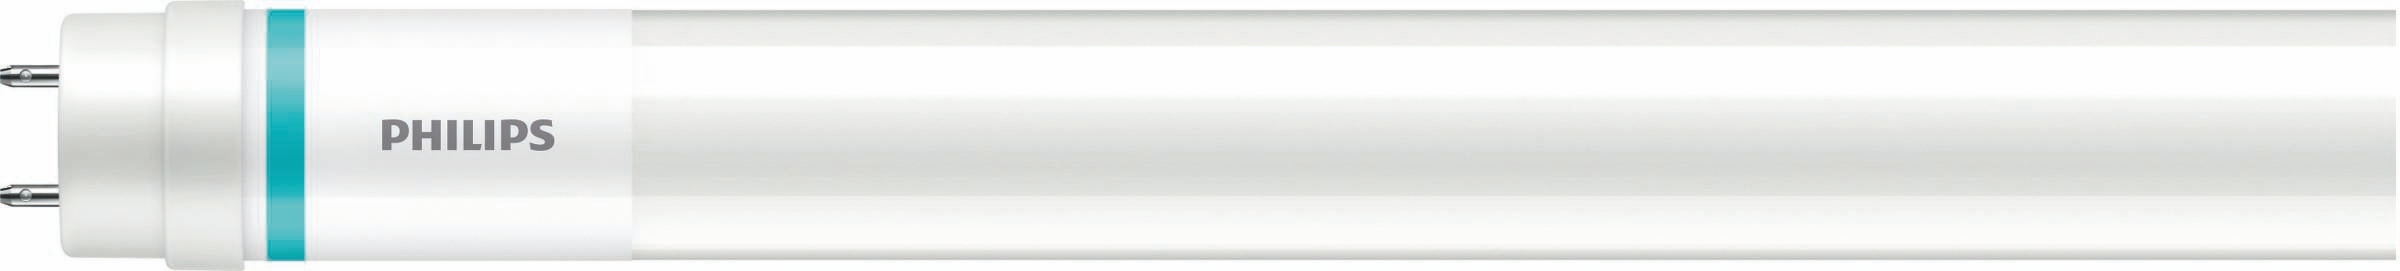 Philips 64685100 MASTER Value LEDtube T8 KVG/VVG/230V 1200 mm, 190 °, 14 W, 830, 2000 lm, G13, nicht dimmbar